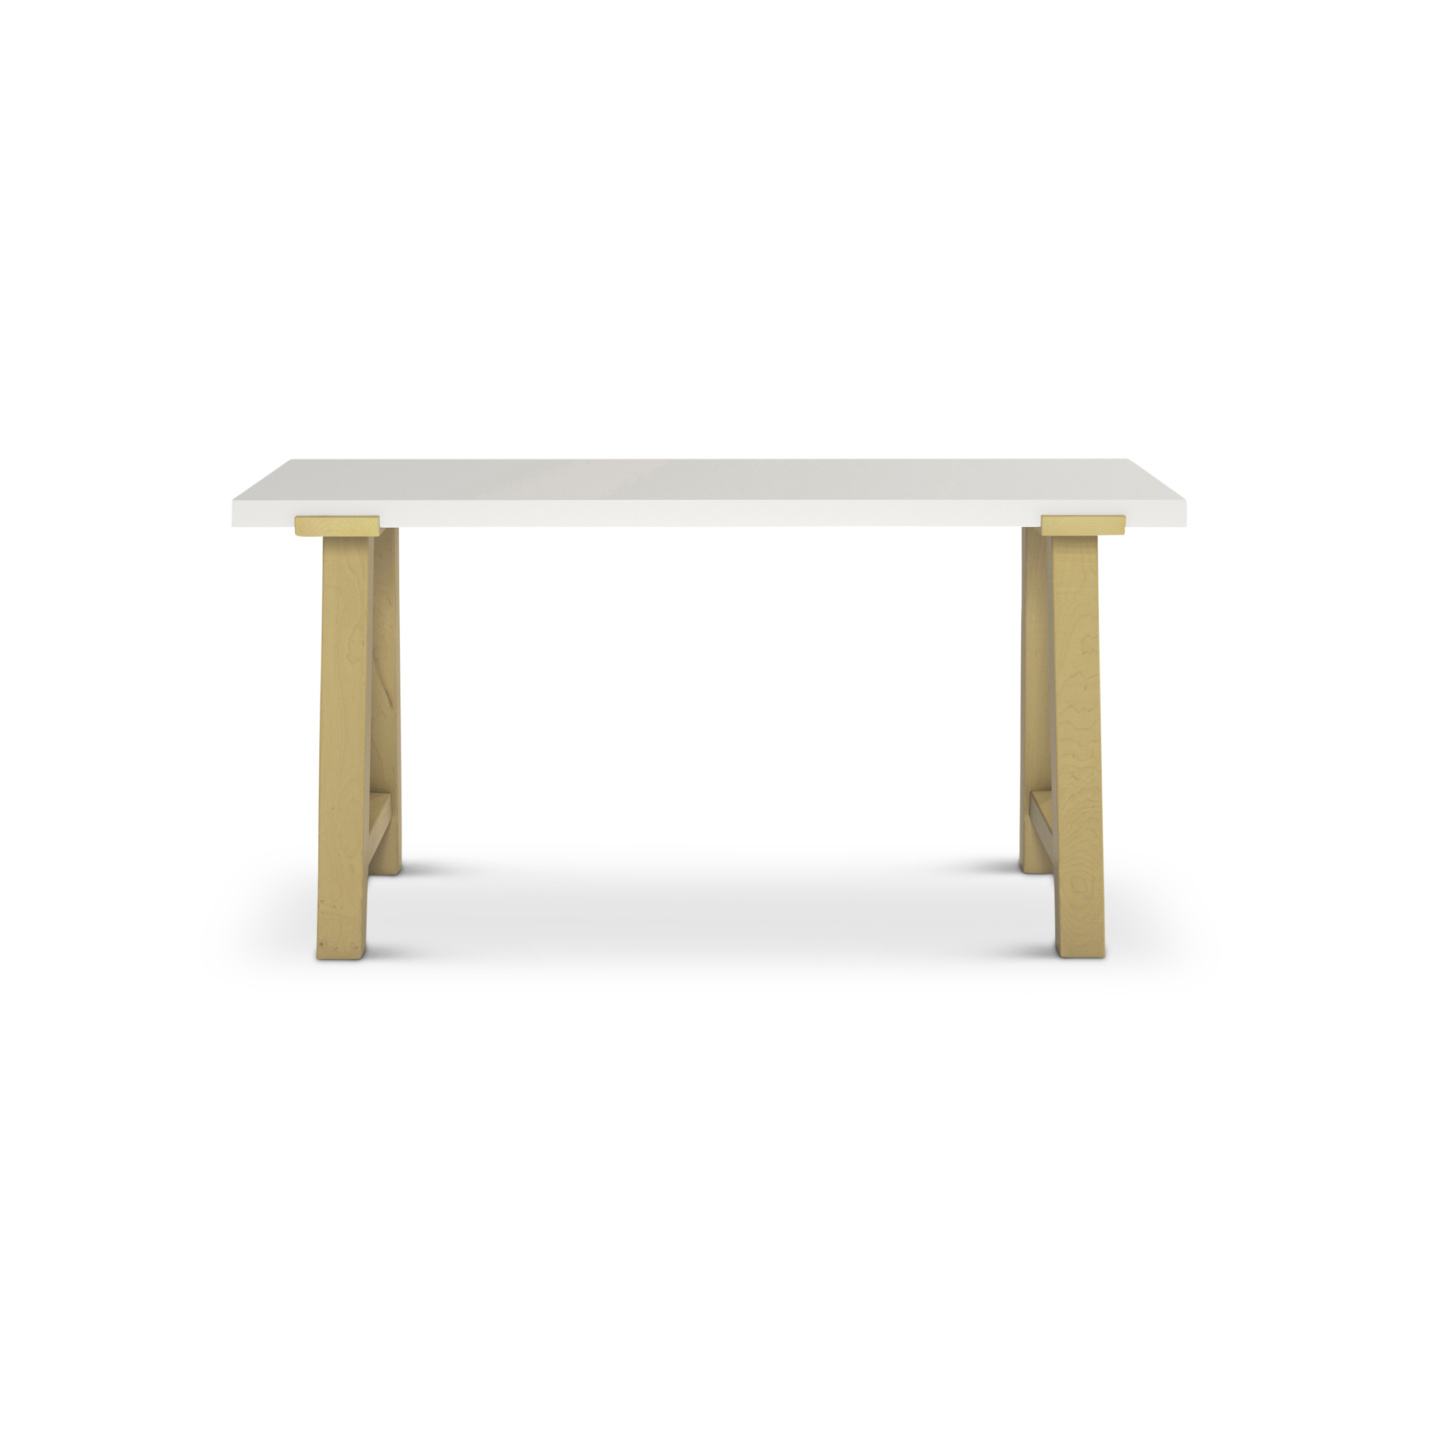 Swedish desk with maple legs